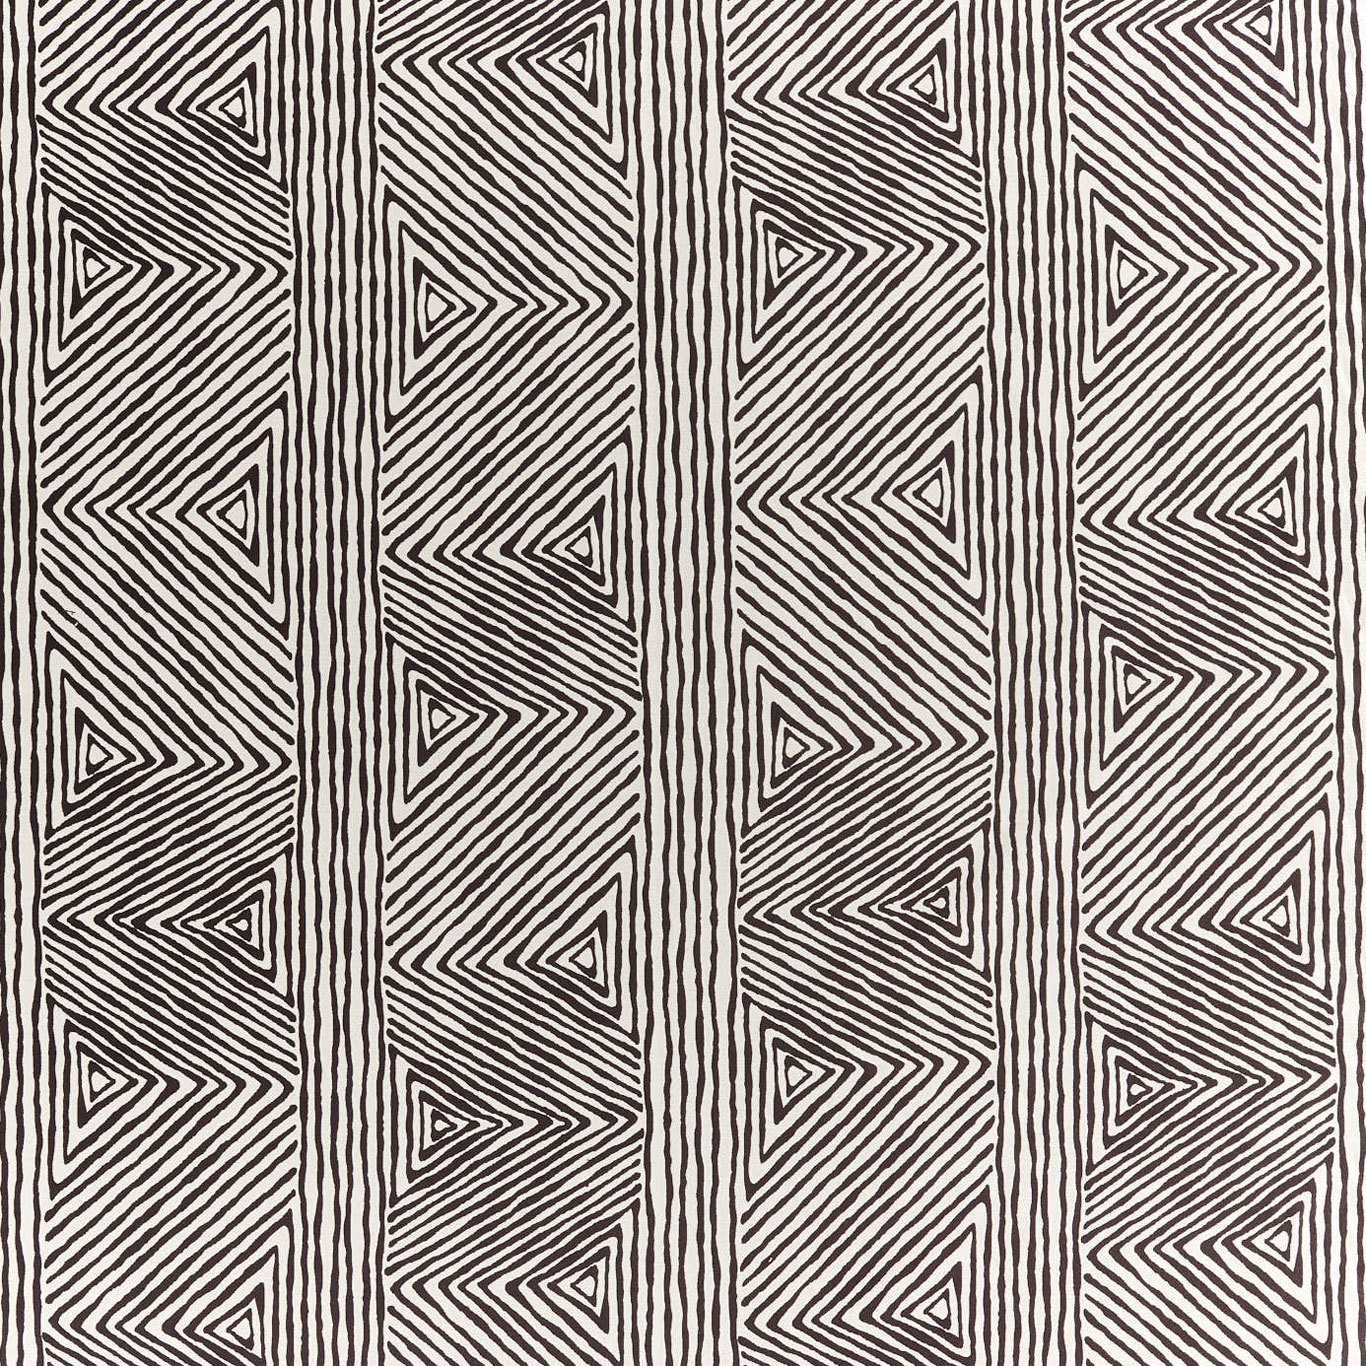 Zamarra Zebra Fabric by HAR